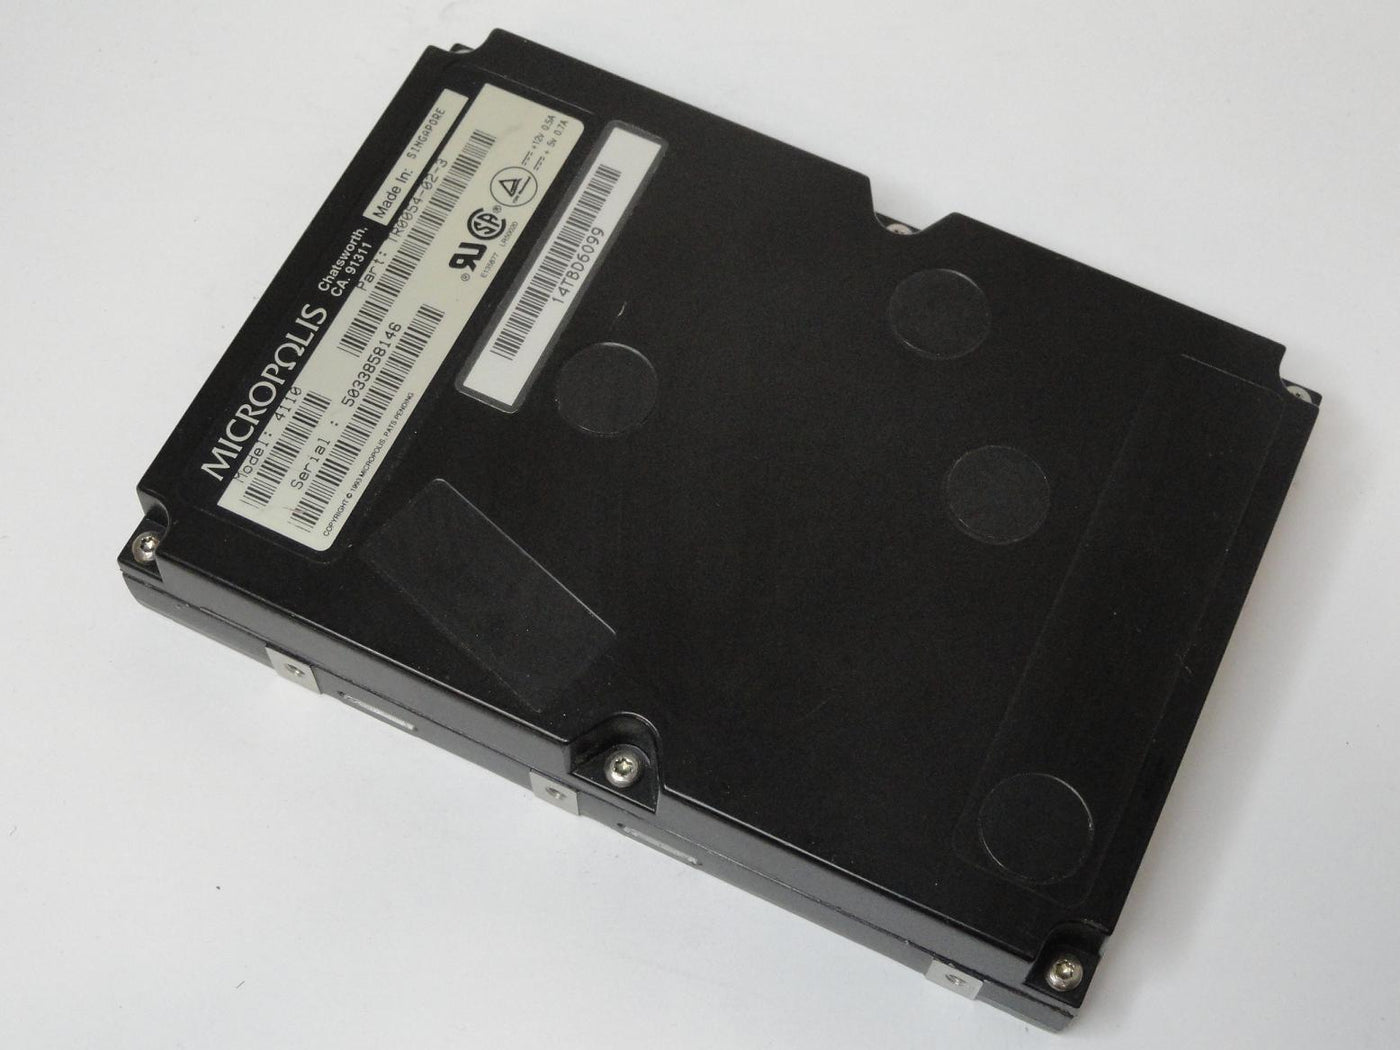 TR0054-02-3 - Micropolis 1GB SCSI 50 Pin 5400rpm 3.5in HDD - Refurbished